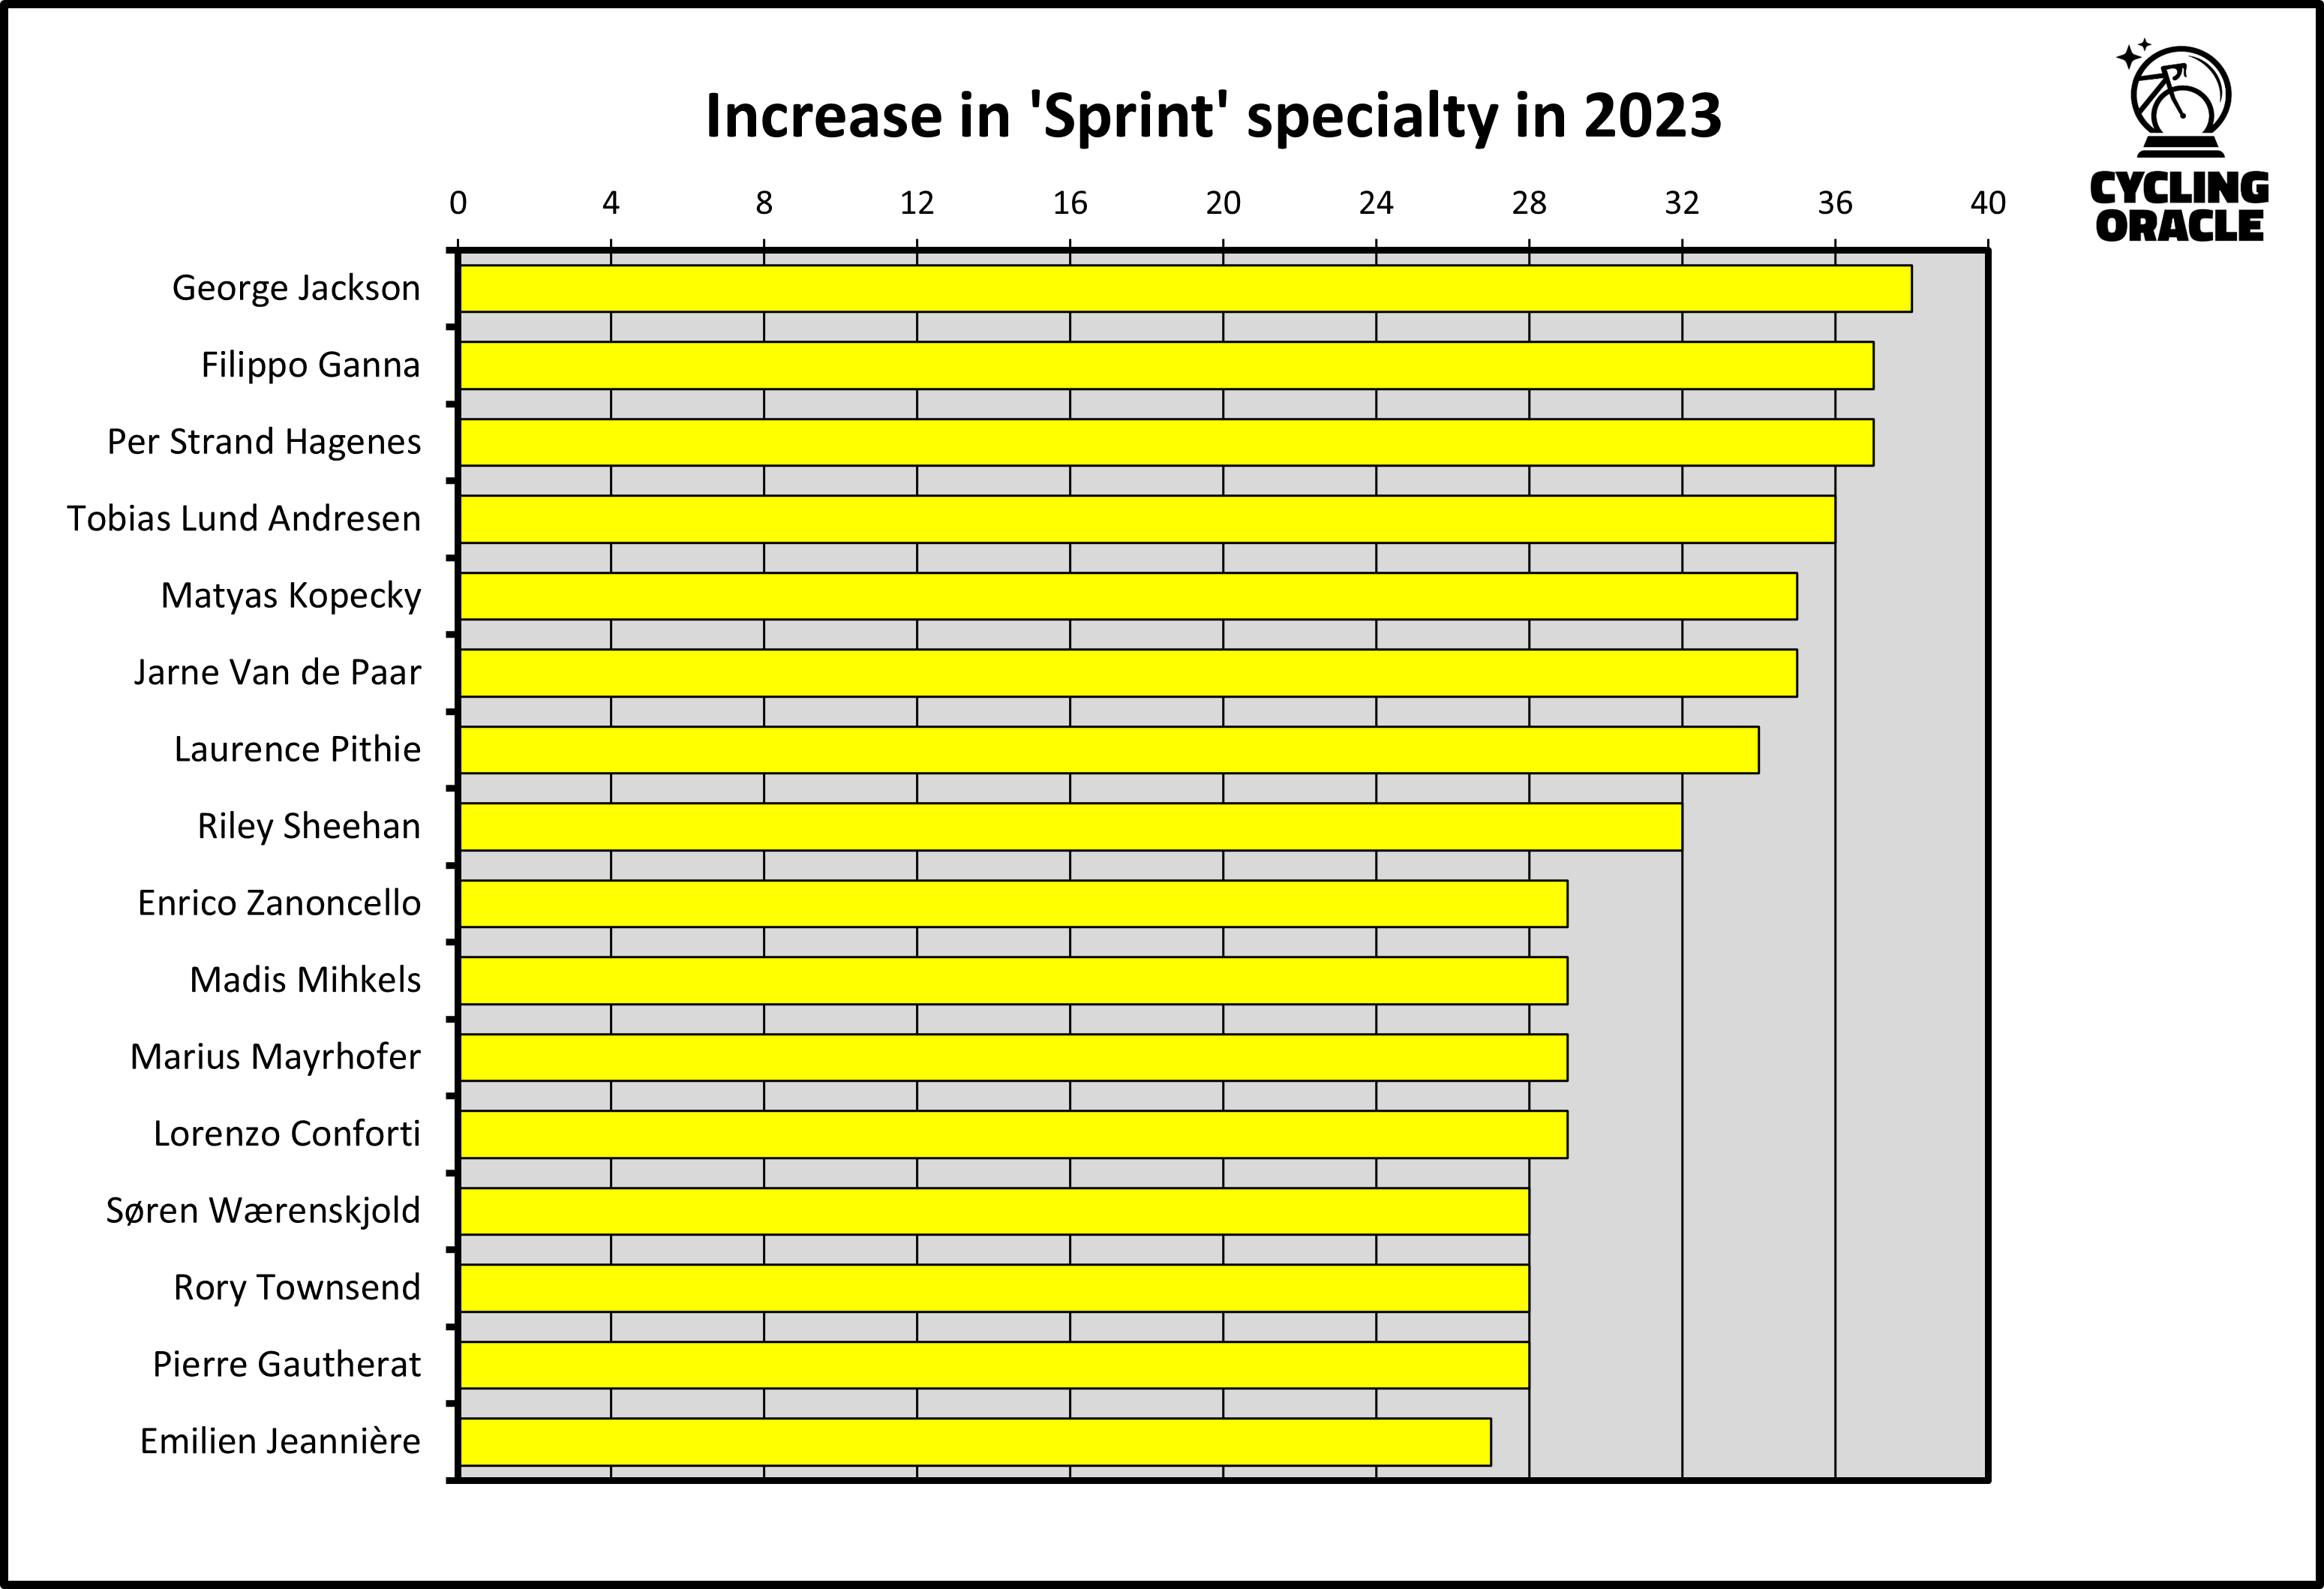 Most progress in sprint in 2023